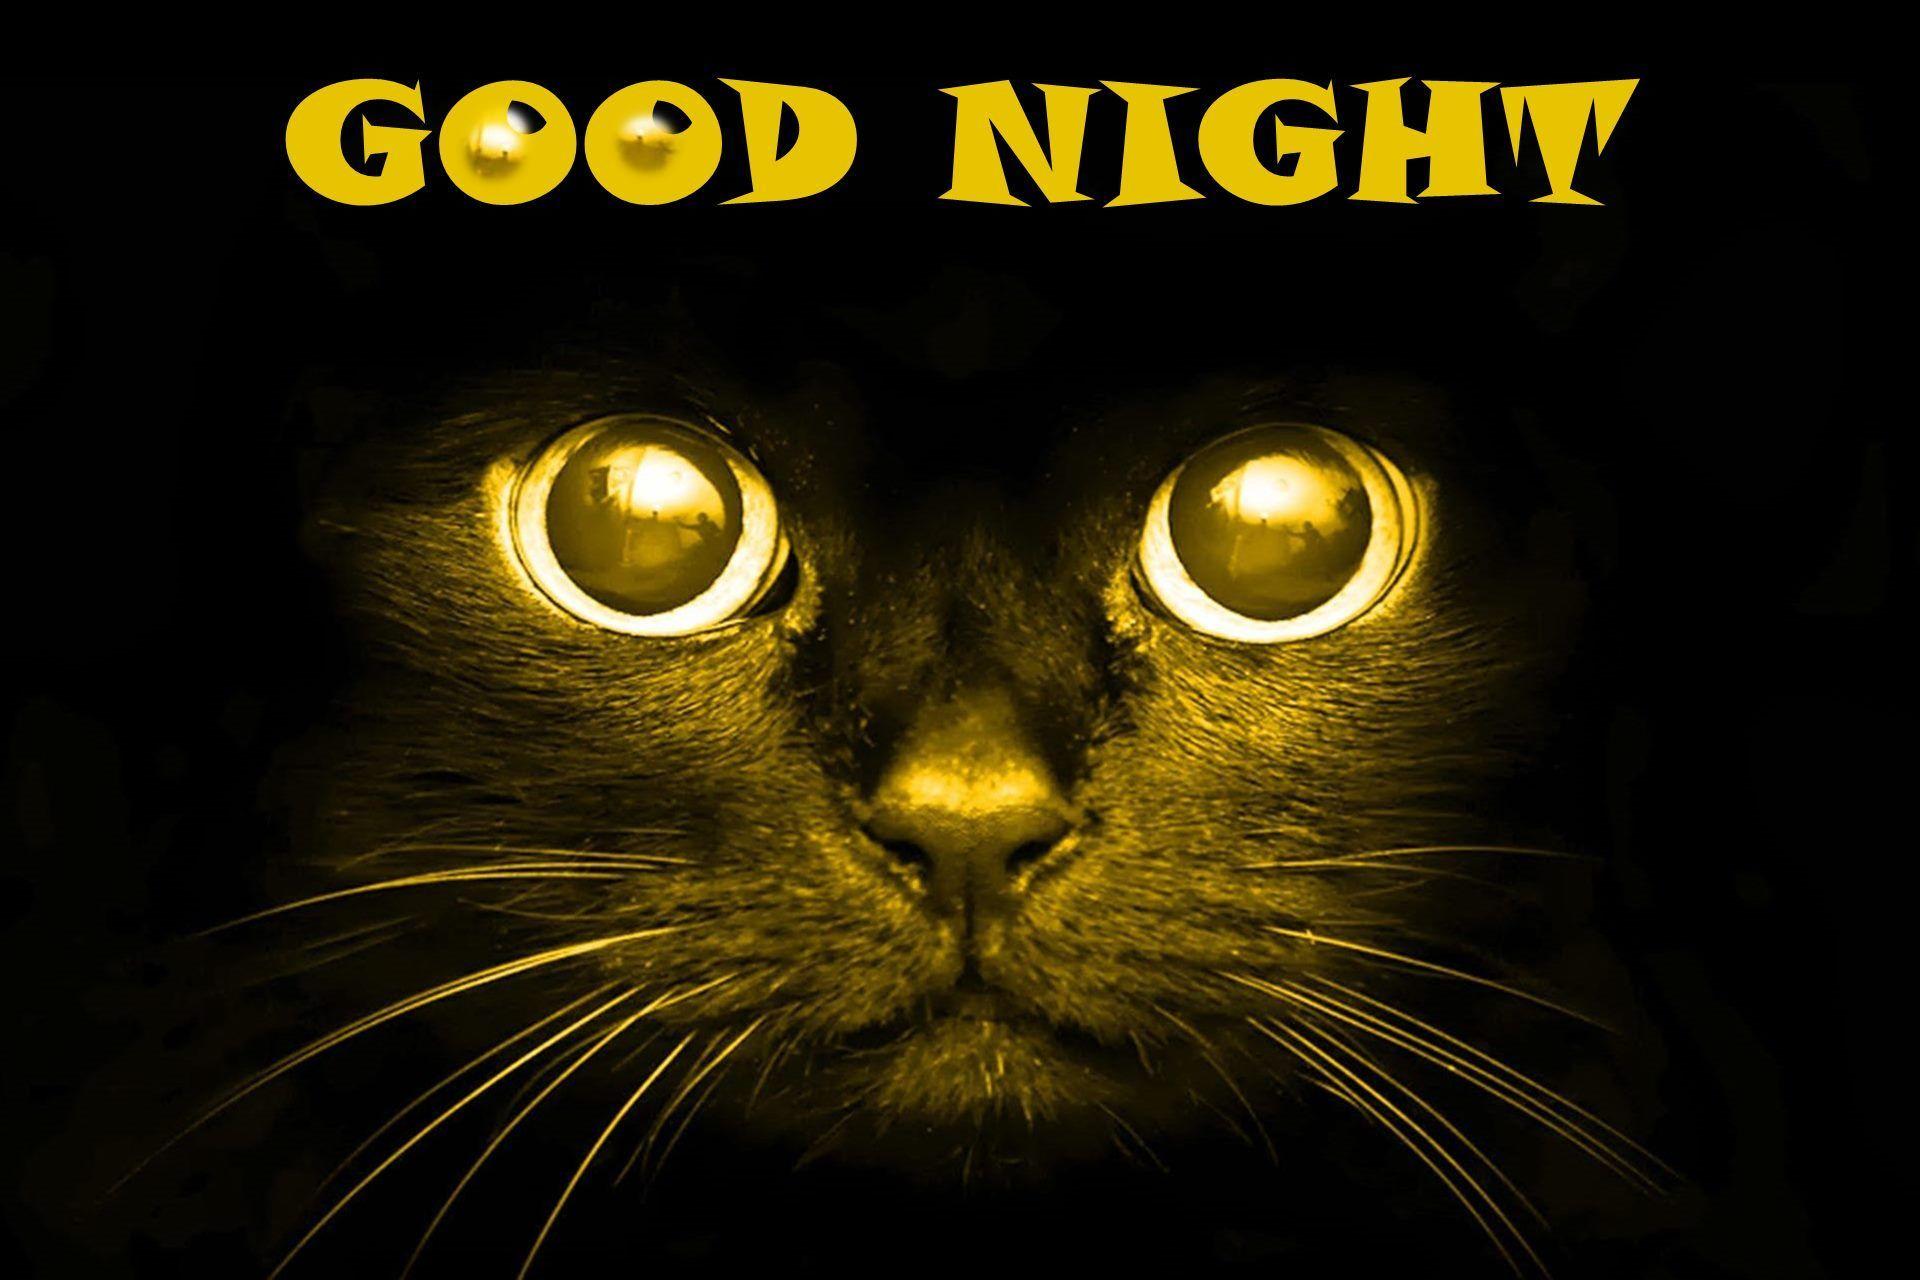 Black Cat Good Night. Good Night Scary Cat Black Background